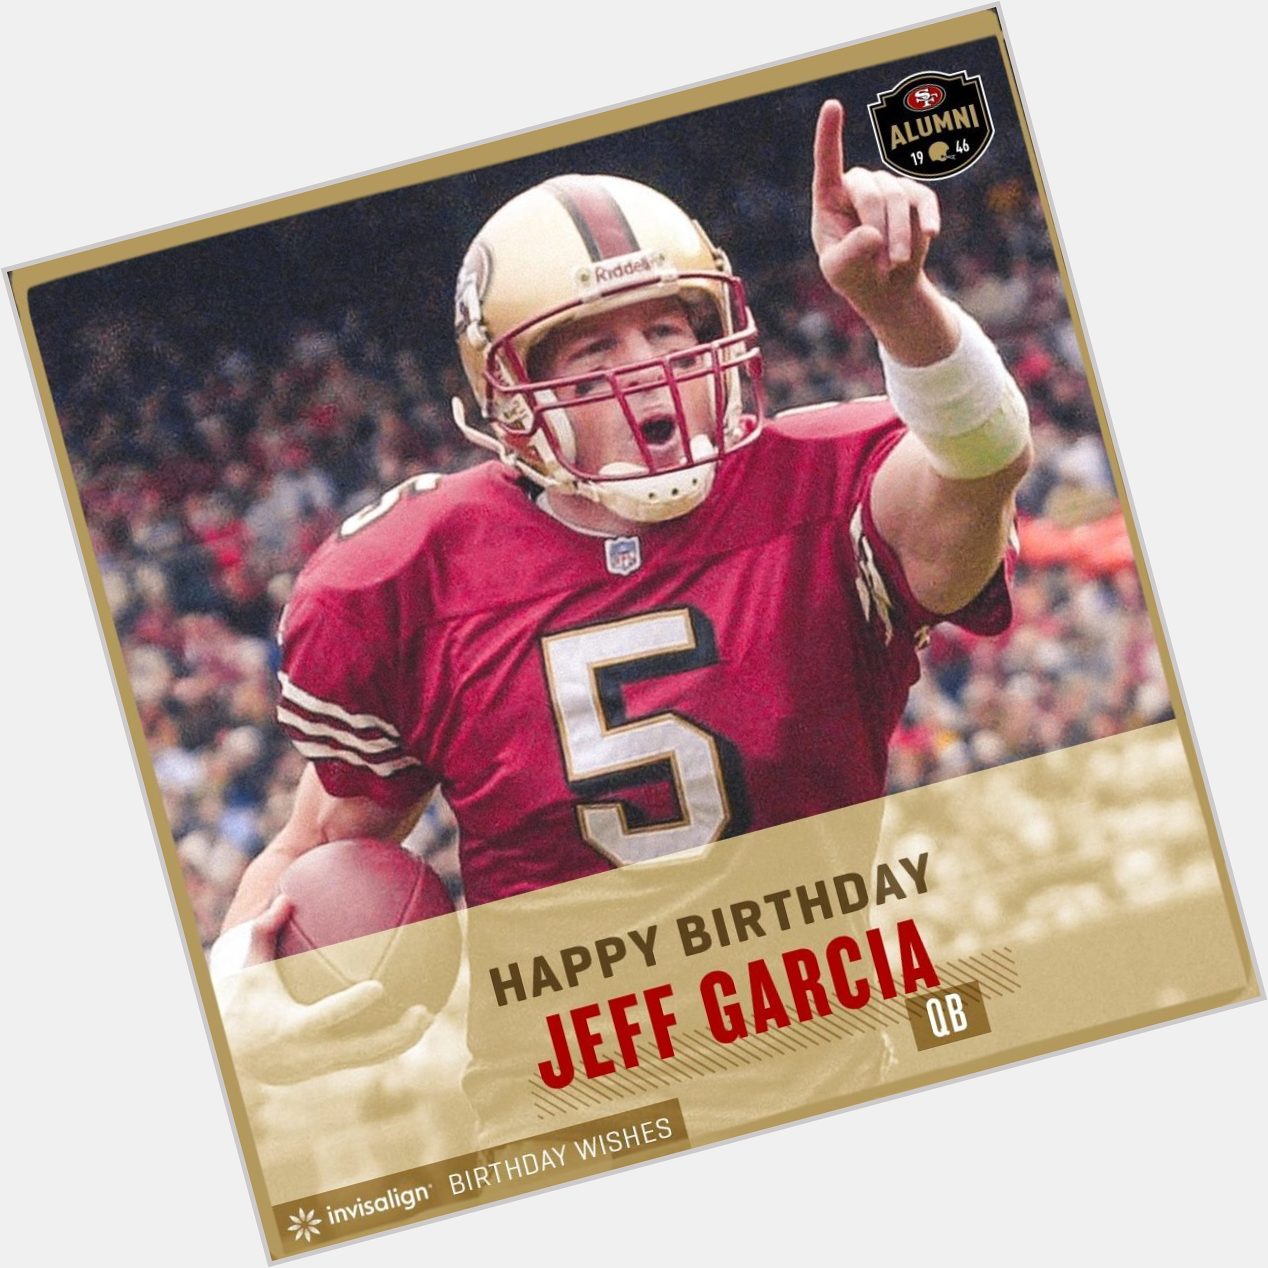 Happy 49th birthday Jeff Garcia!  